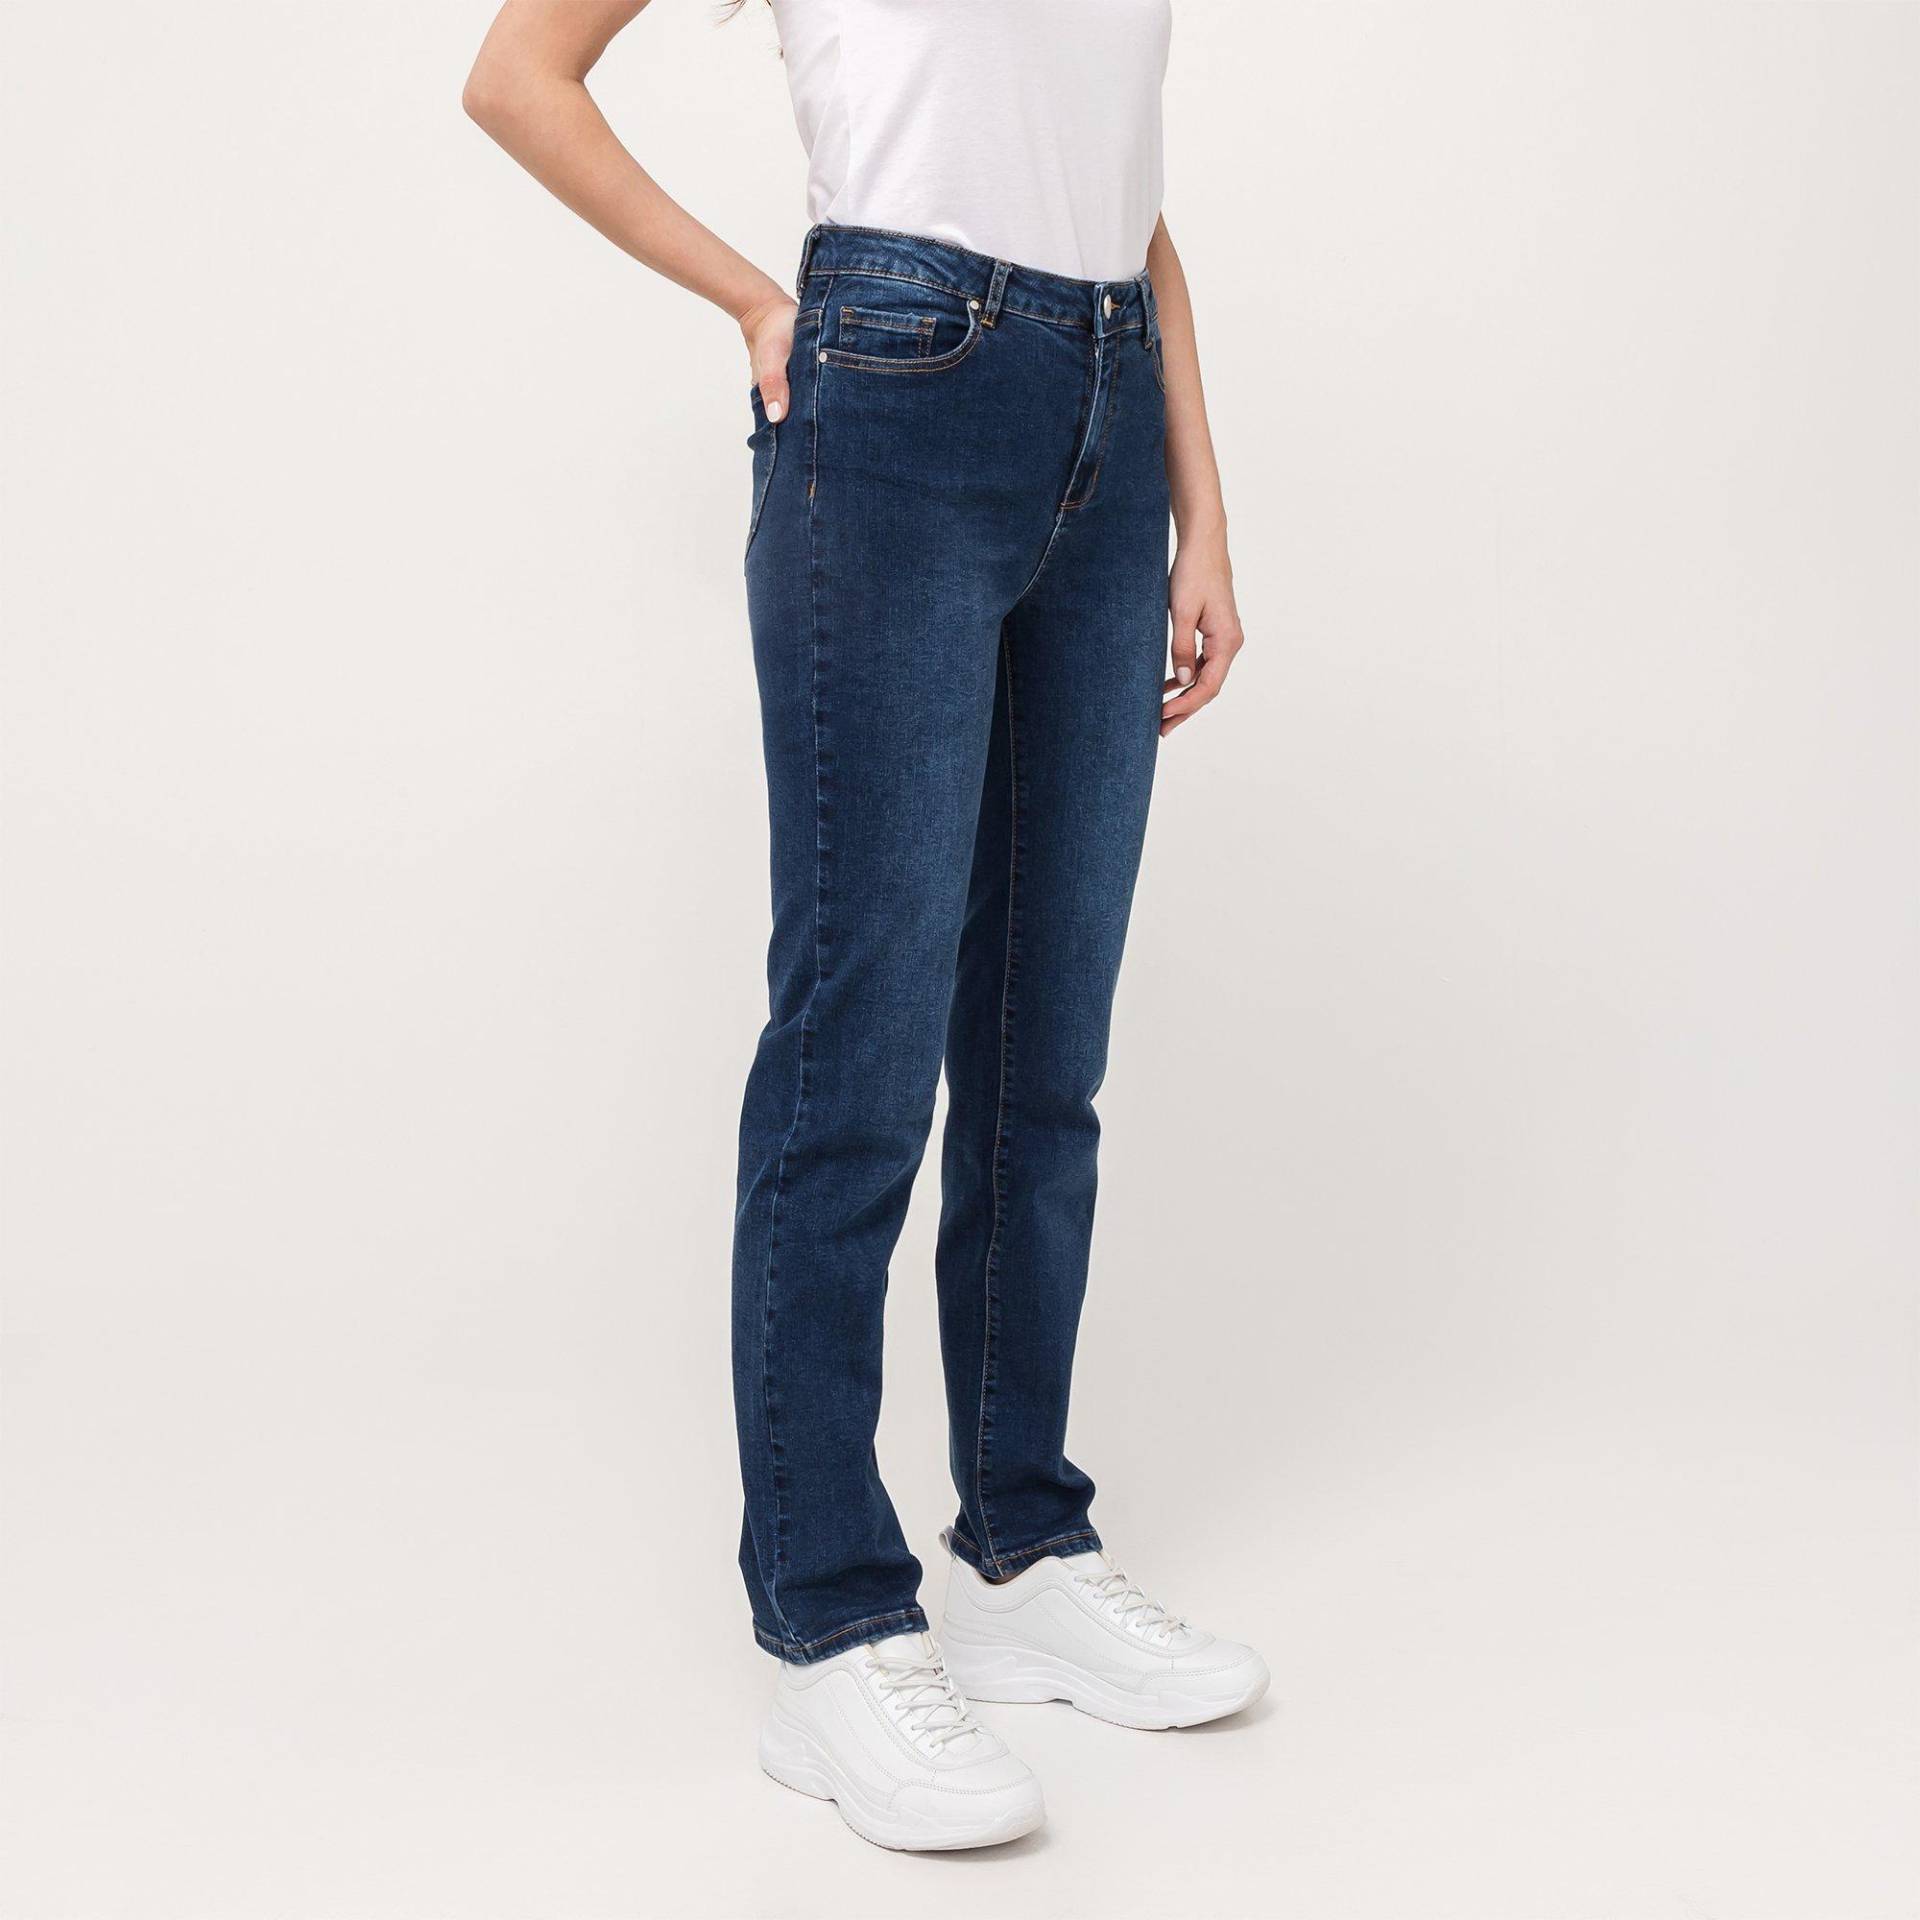 Jeans, Straight Leg Fit Damen Blau Denim L30/W36 von Manor Woman